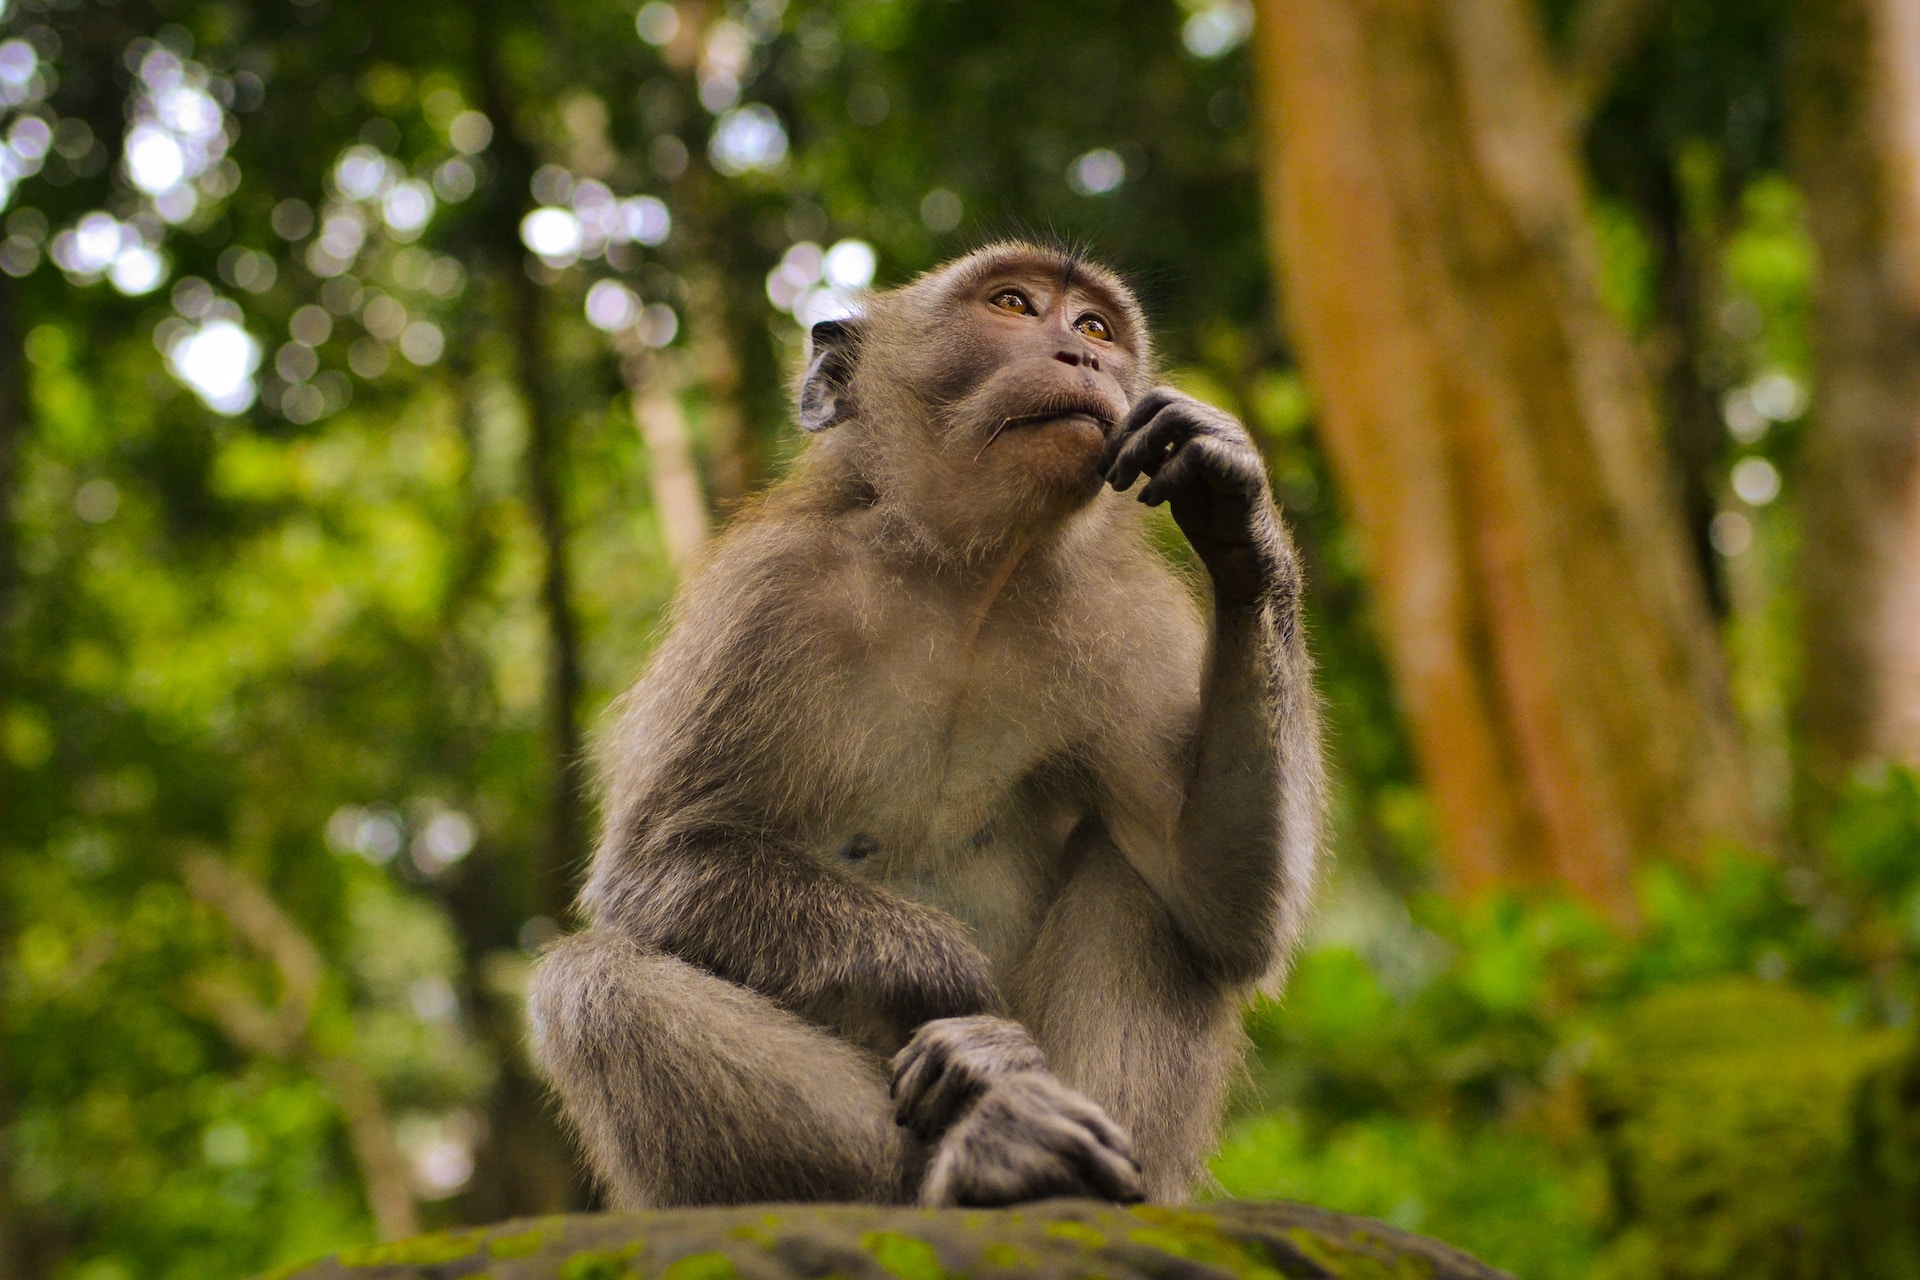 Monkeying Around: Exploring the World of Monkeys: 10 Interesting Facts